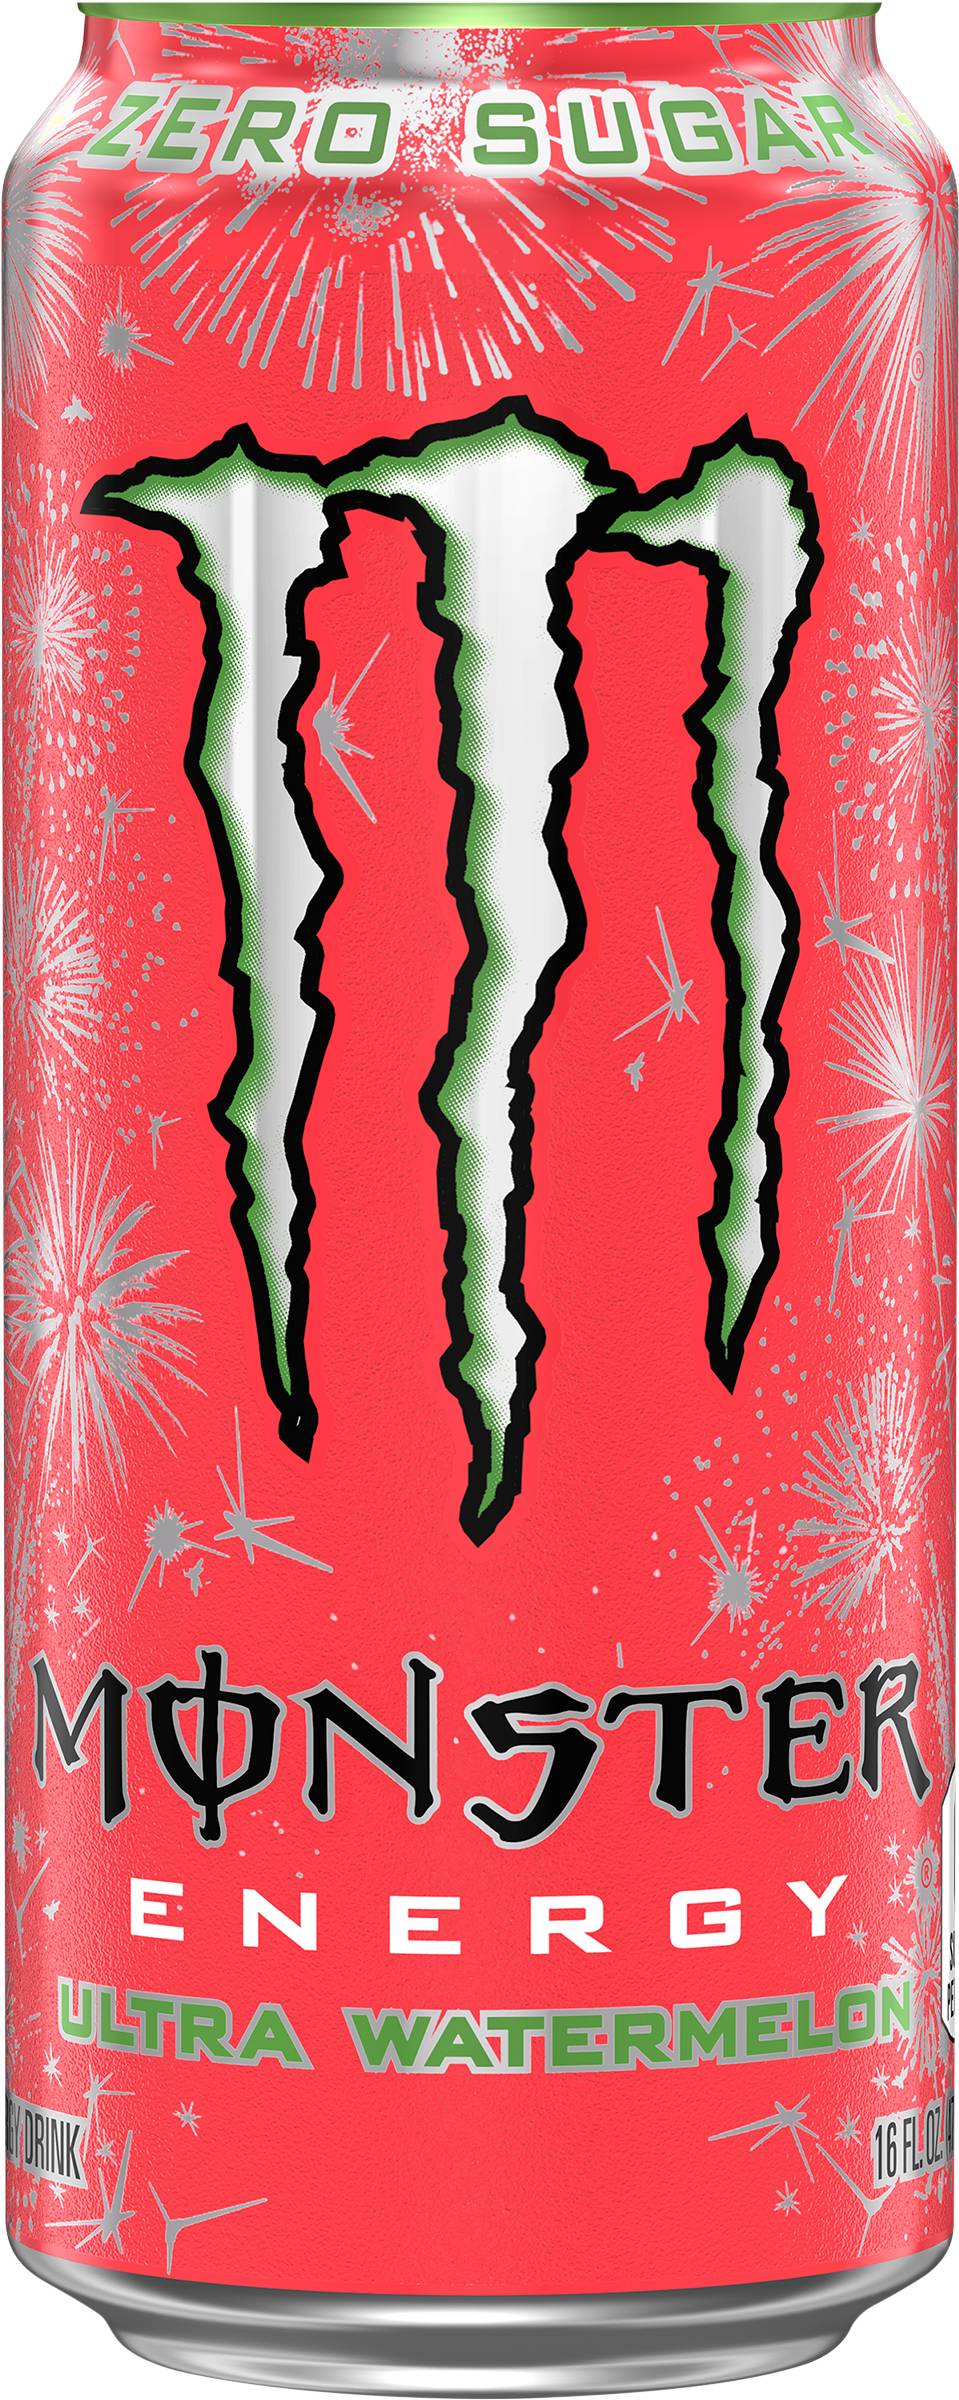 Monster Energy Zero Sugar Energy Drink (16 fl oz) (ultra watermelon)